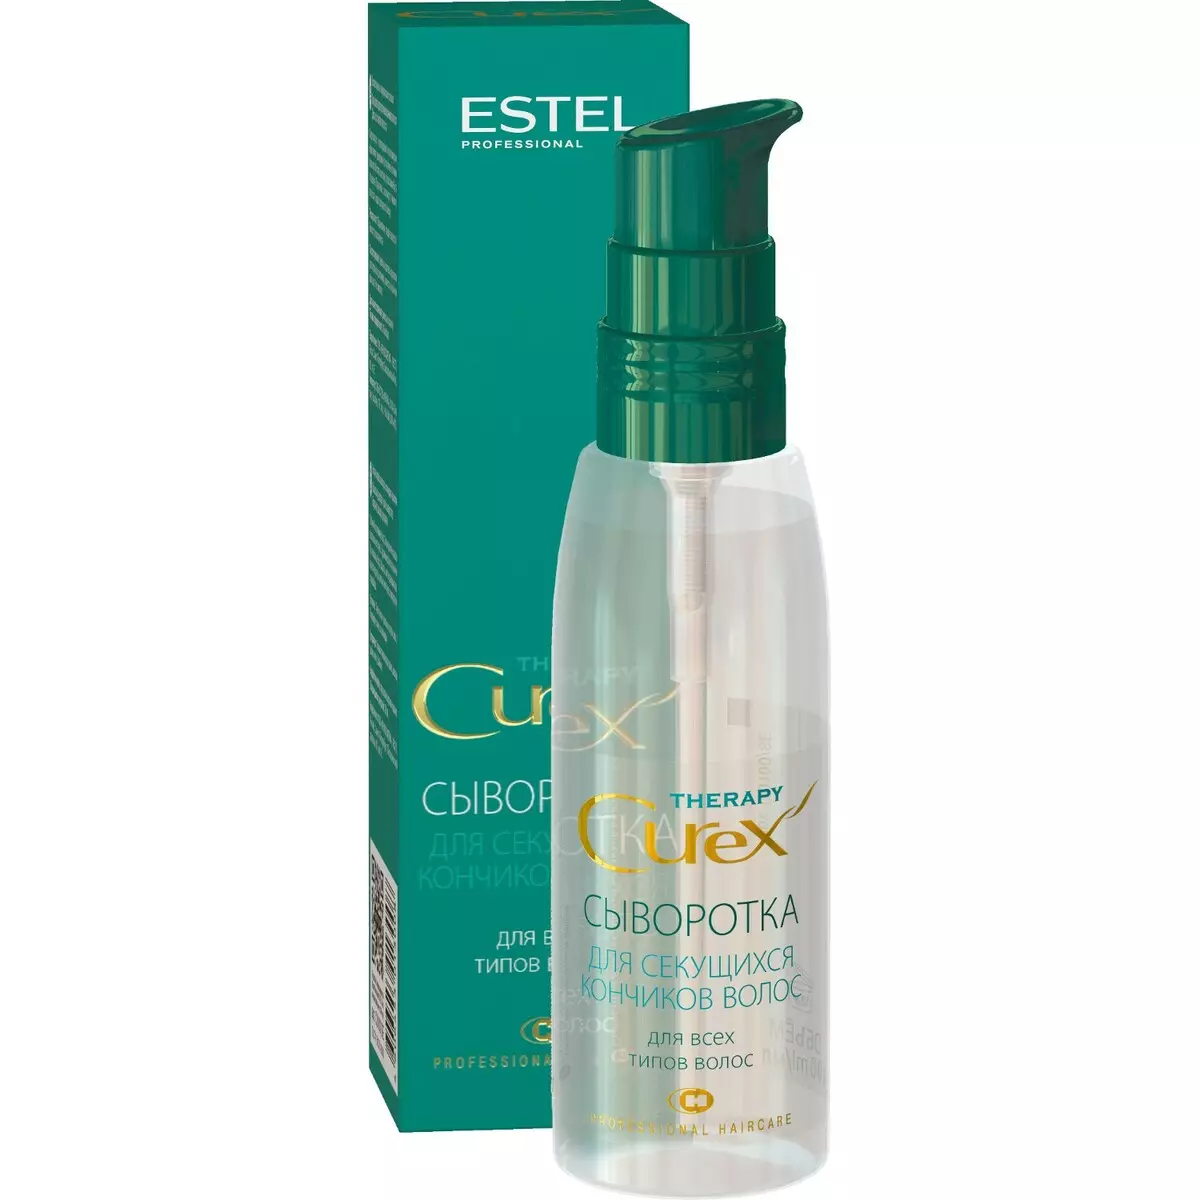 Estel Hair血清：用于发光镜和乳清 - 面纱“即时回收”的应用方法，评论 5015_12